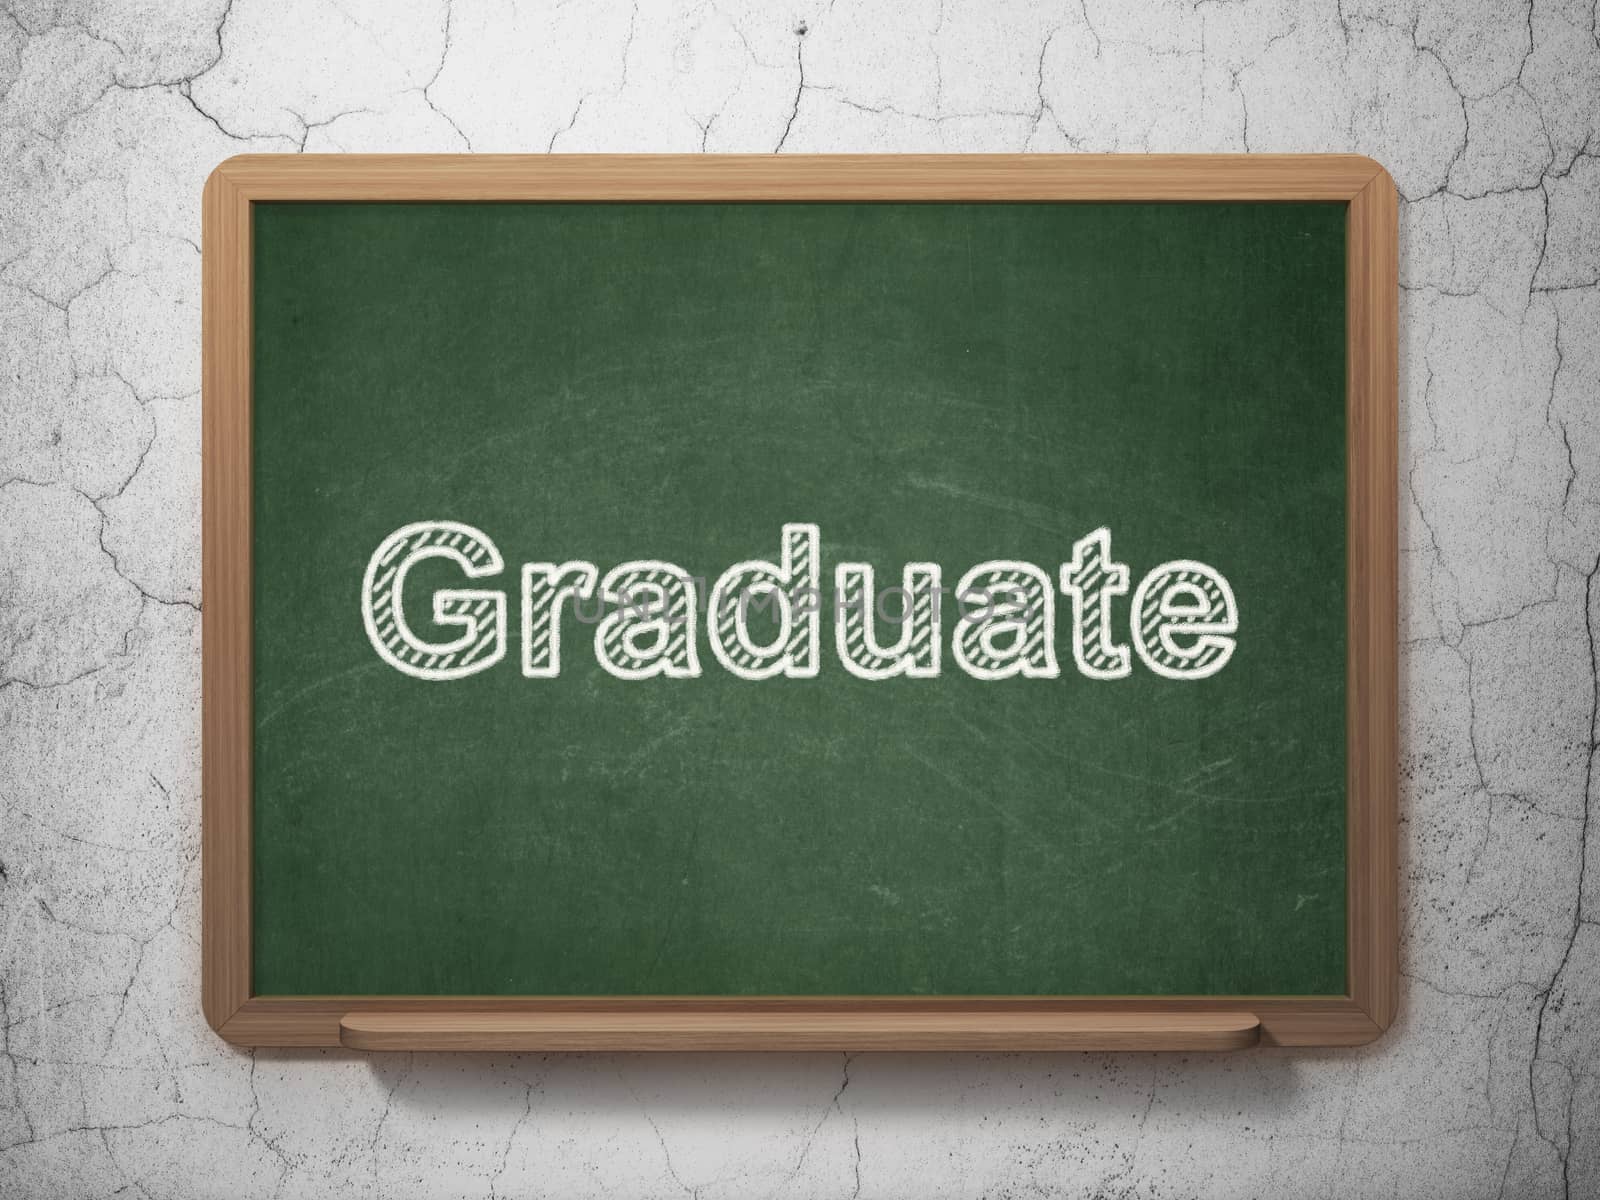 Education concept: Graduate on chalkboard background by maxkabakov